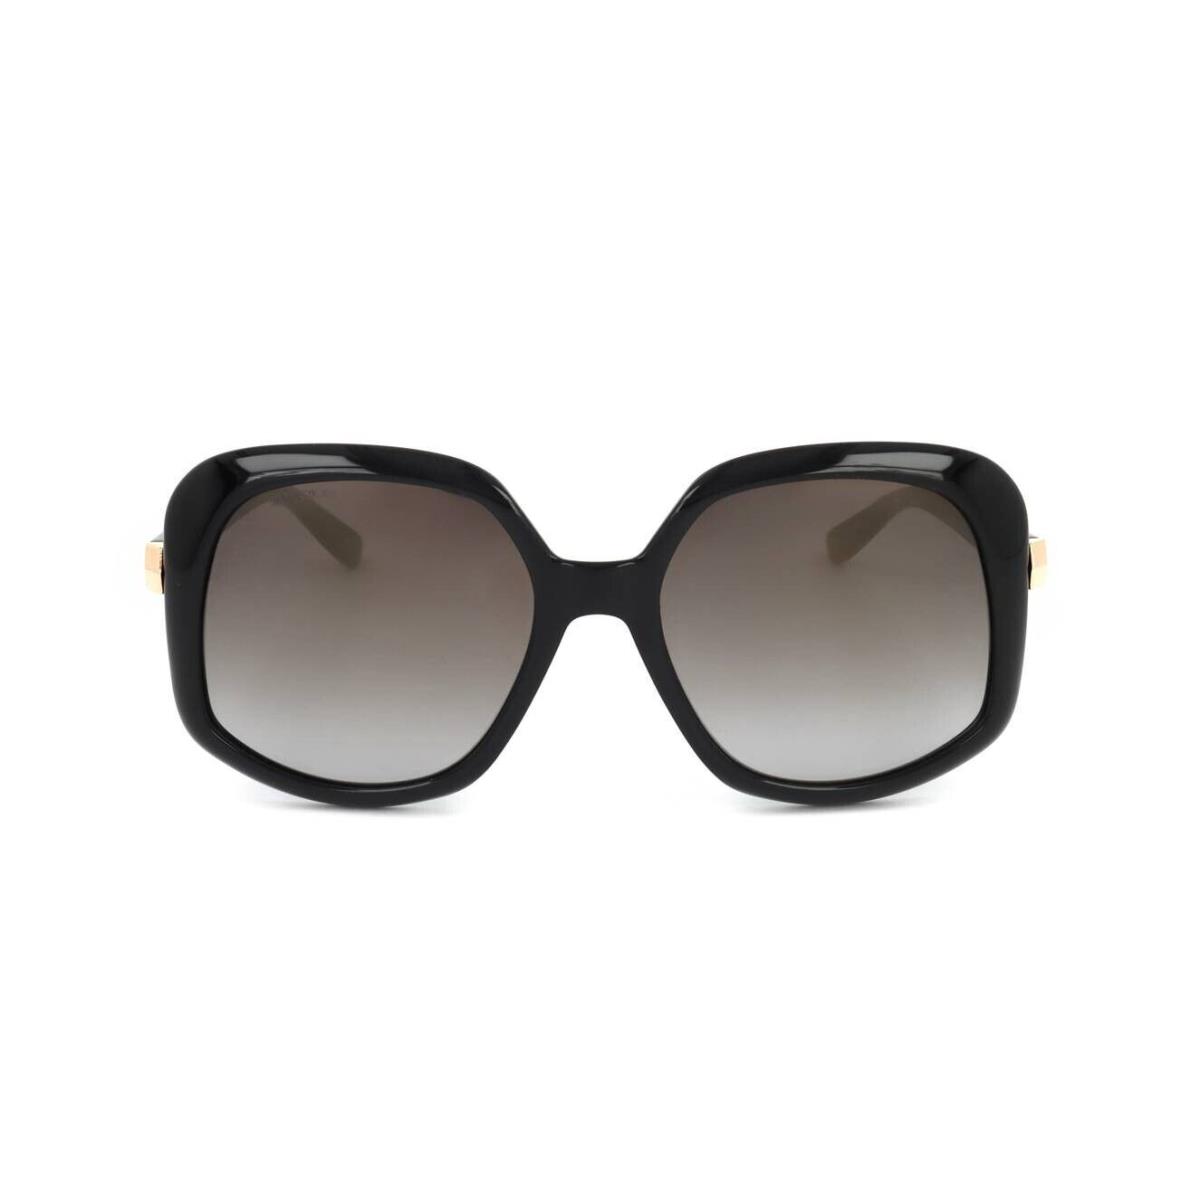 Jimmy Choo Sunglasses Amada/s 807 Black 56mm Square Frame Women